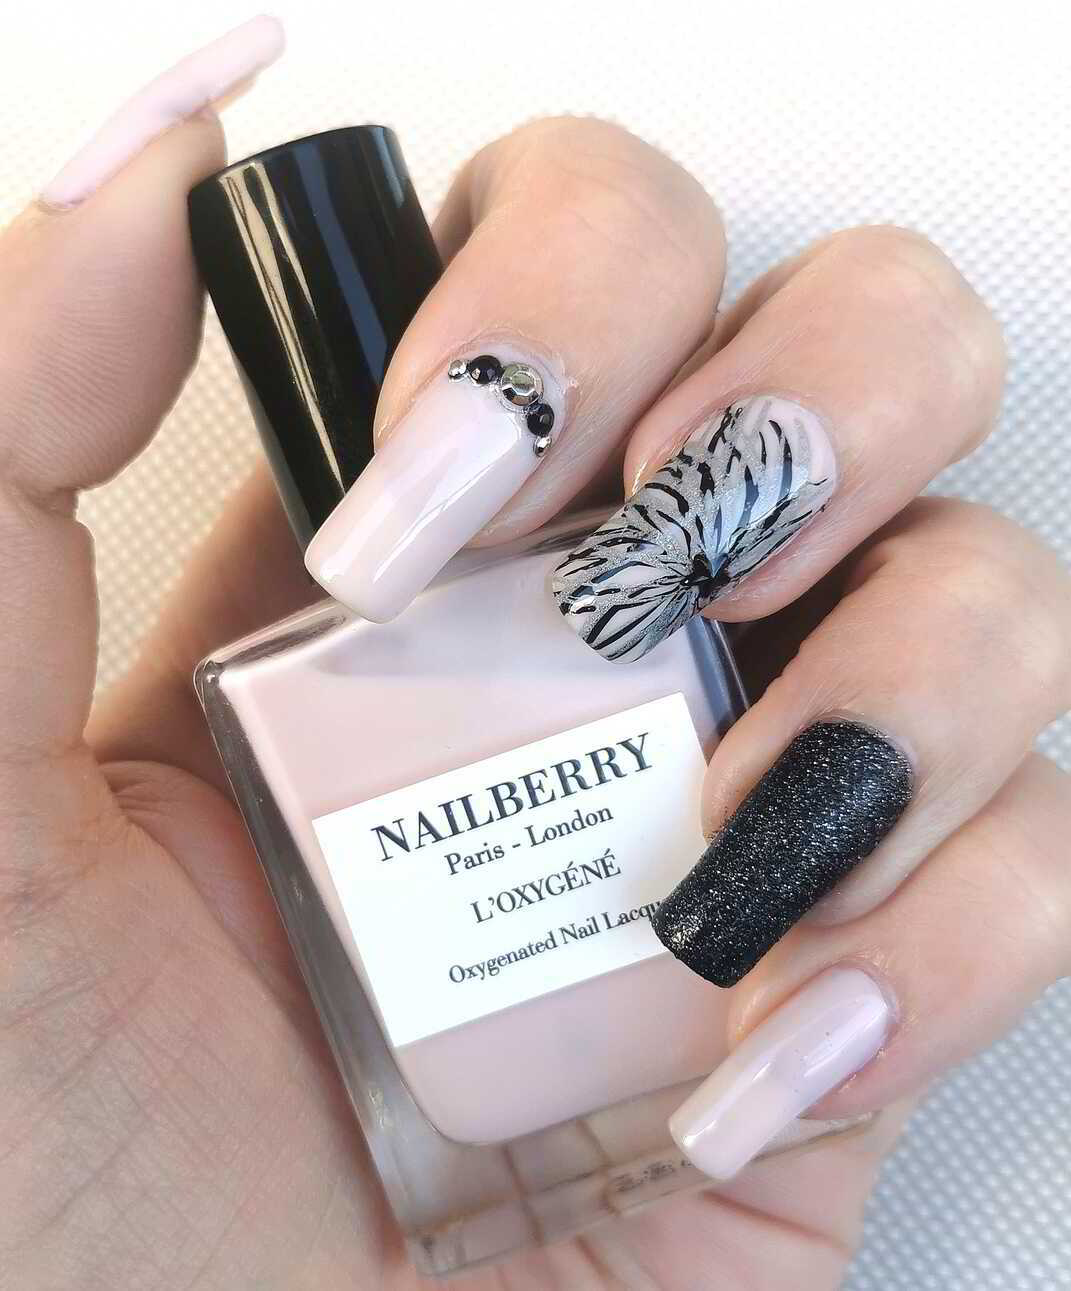 Nail polish manicure of shade Nailberry Candy Floss, IsaDora Black Crush,Konad Black Stamping Polish,Colour Alike Quiet Gray